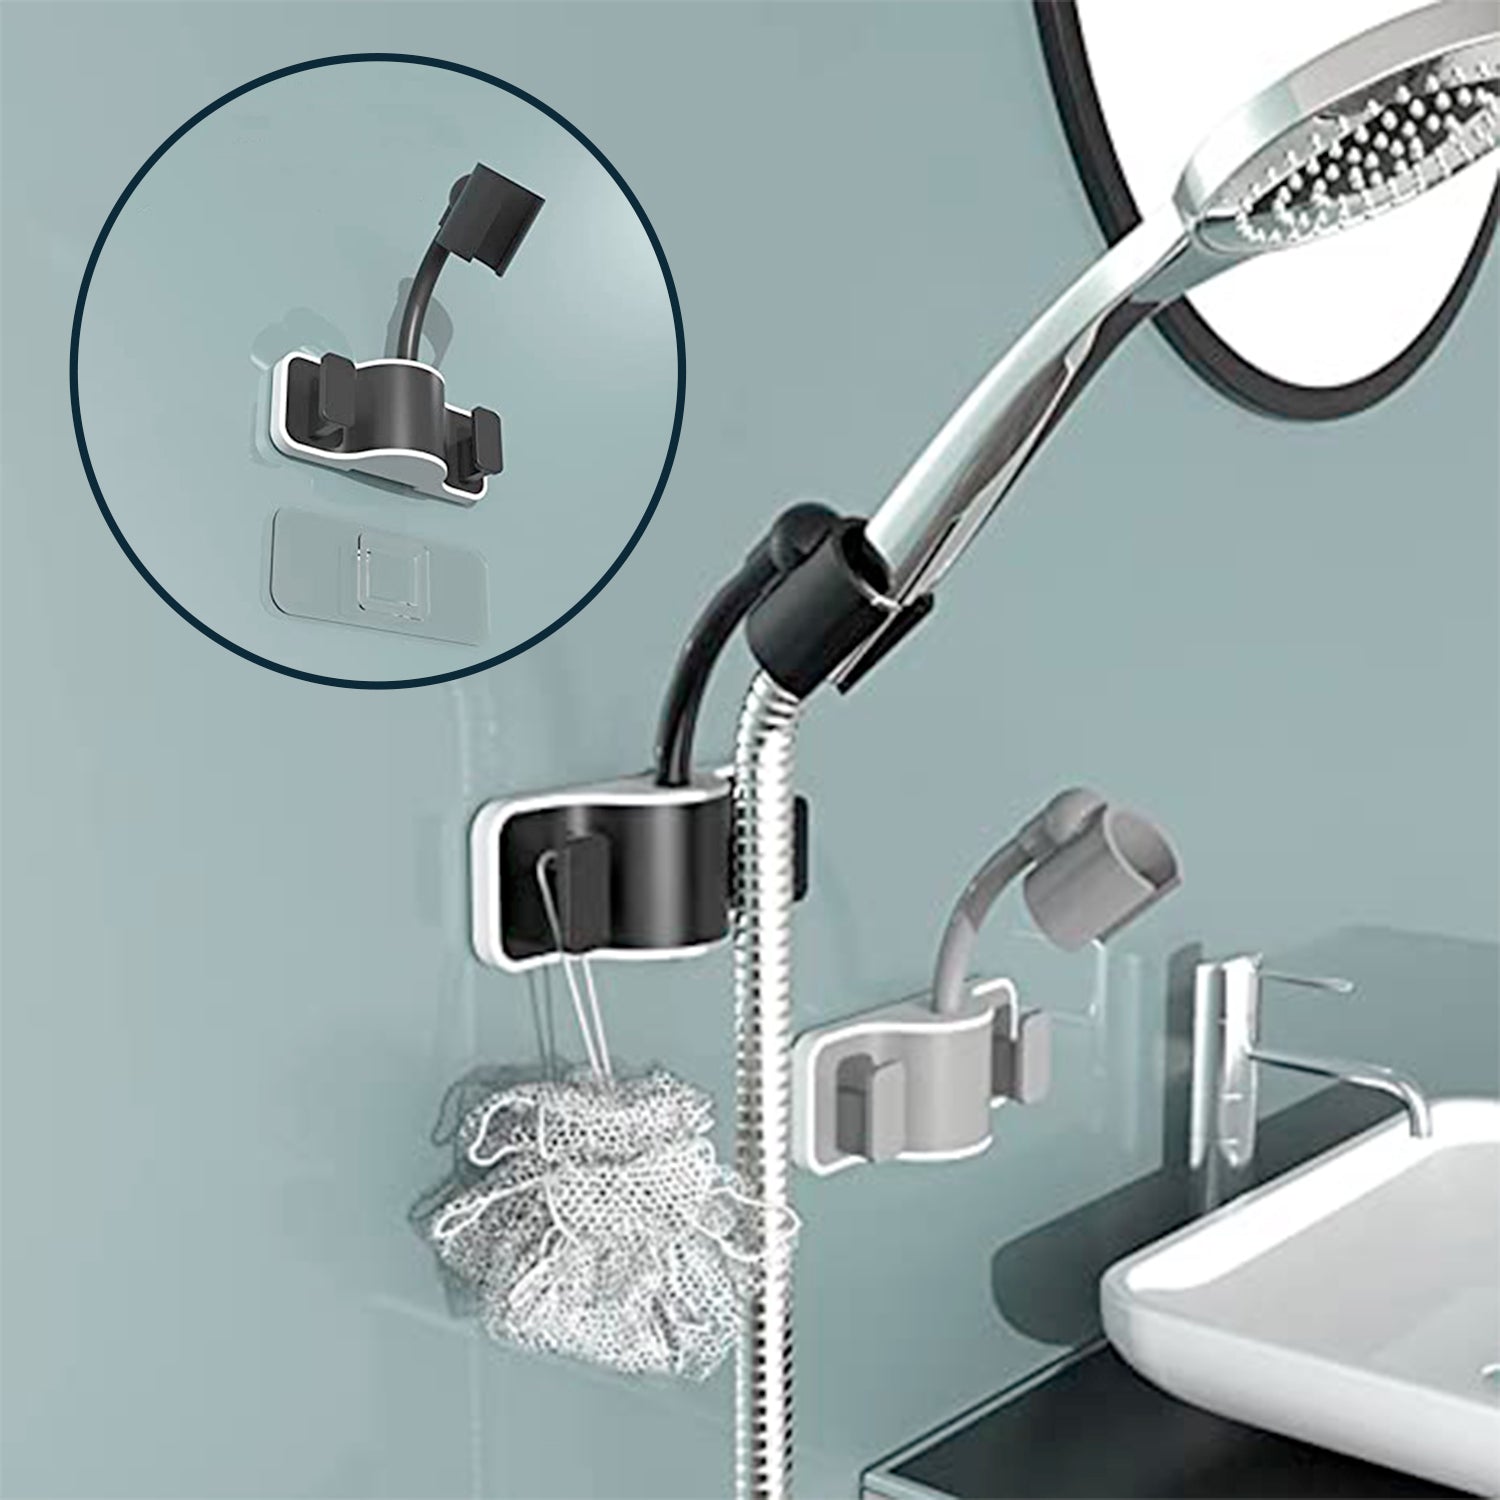 7687 Shower Head Holder Bracket Adjustable   Showerhead Wall Mounted Suction Bracket for Bathroom DeoDap